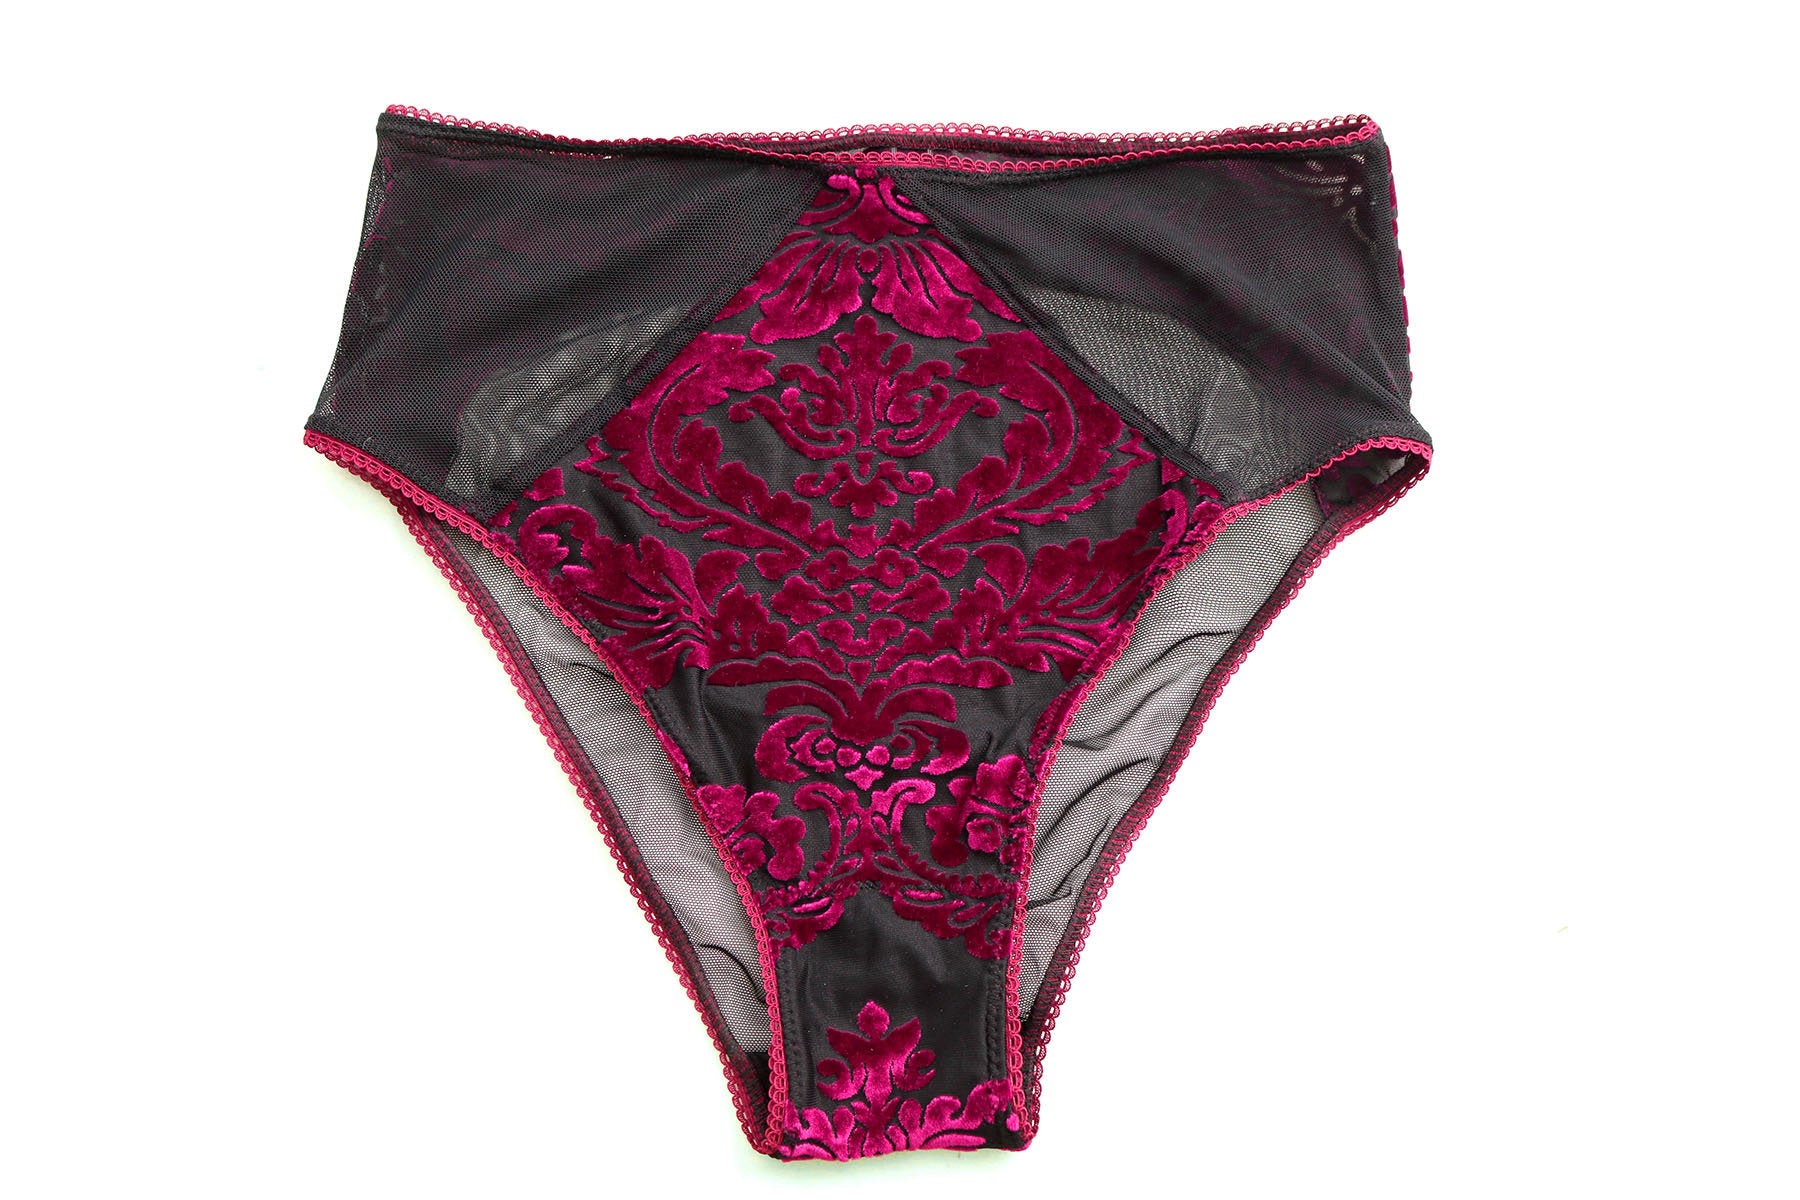 Hight Waist Velvet Panties. Deep Red Magenta and Black Mesh